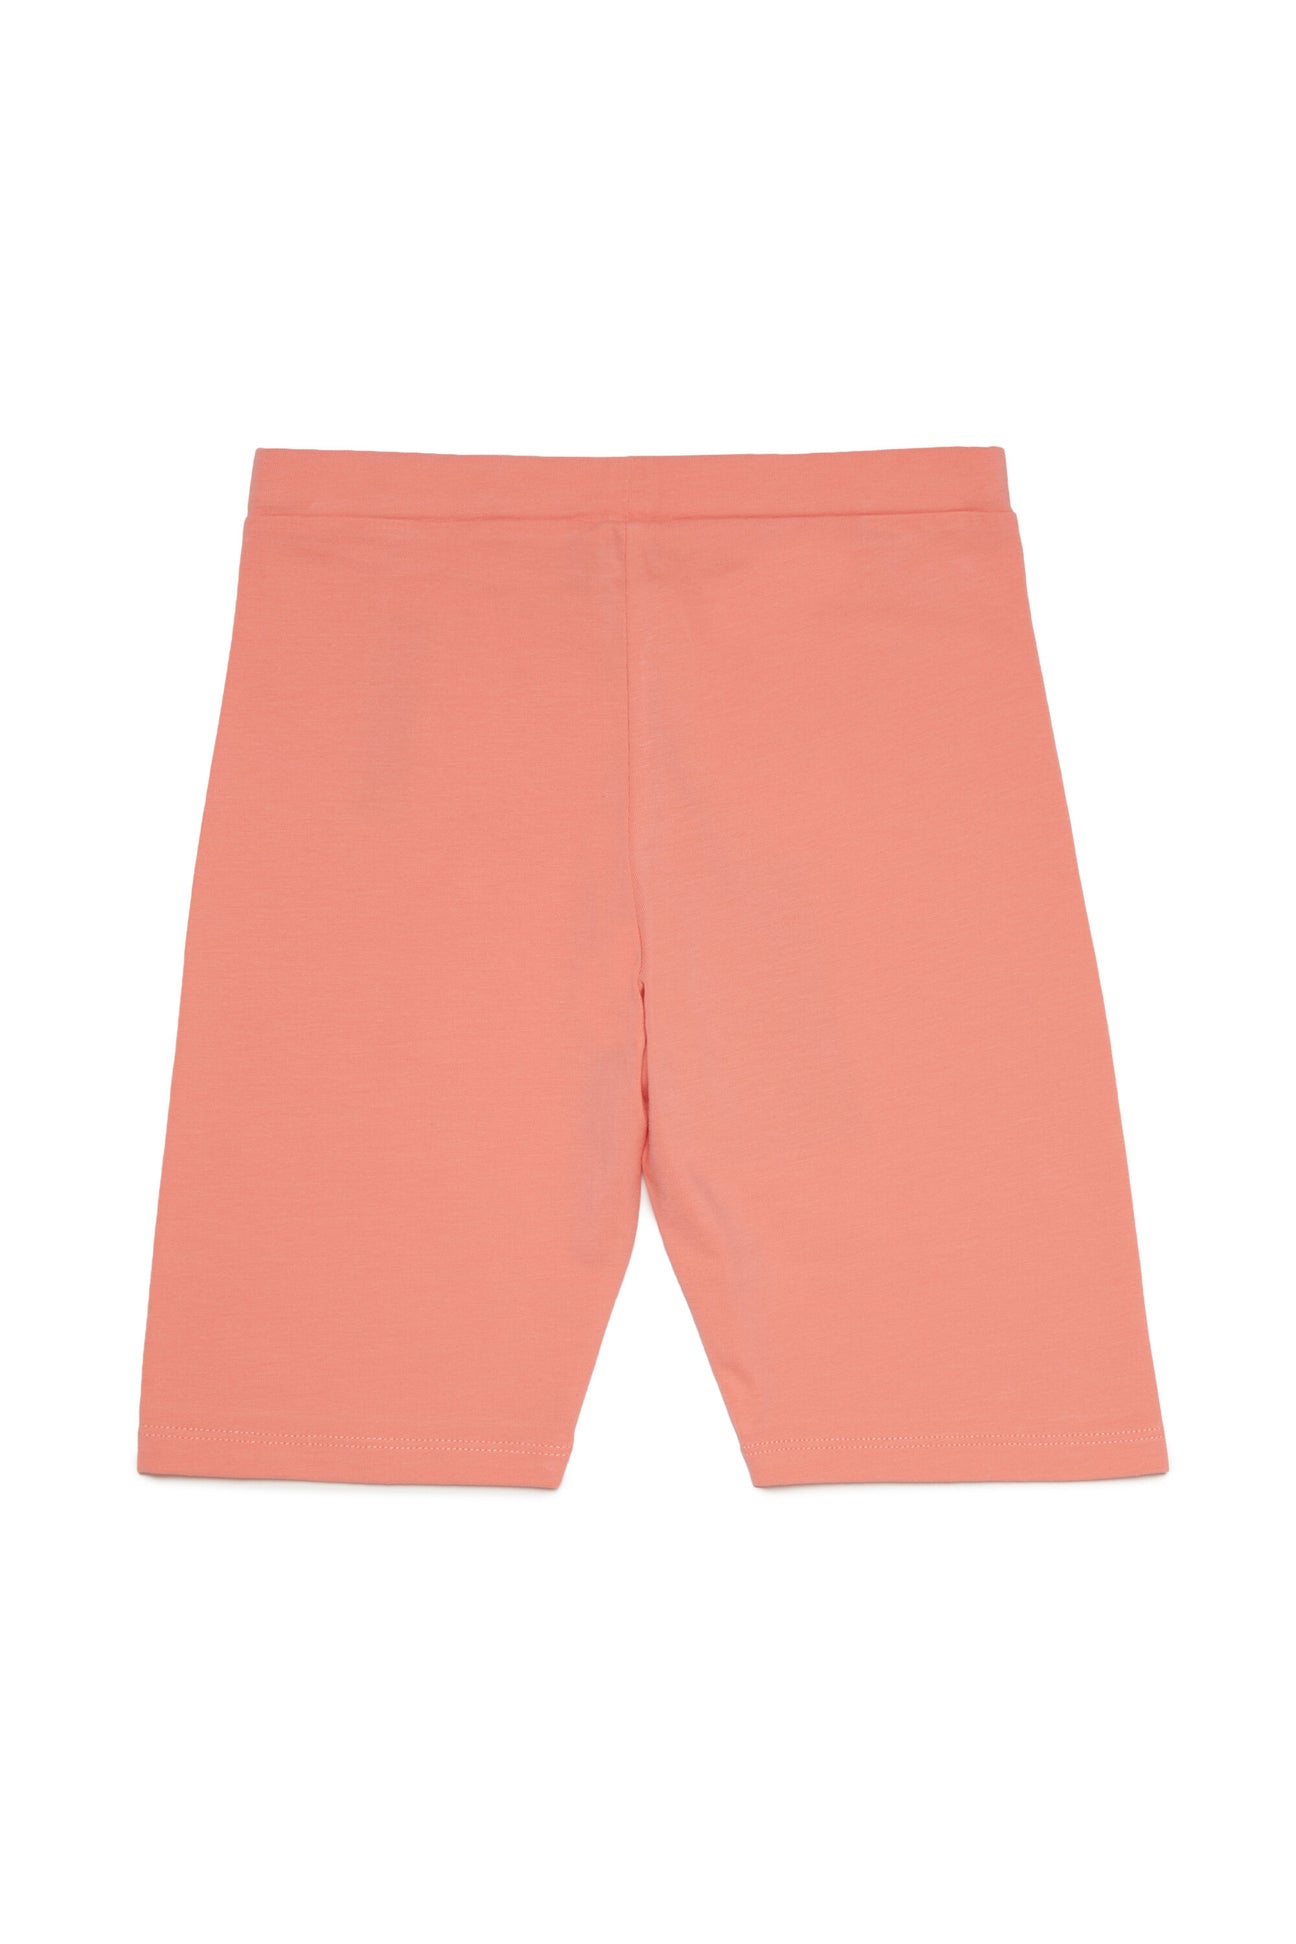 Comprar Falda pantalón elegante Naranja Faldas-minifaldas